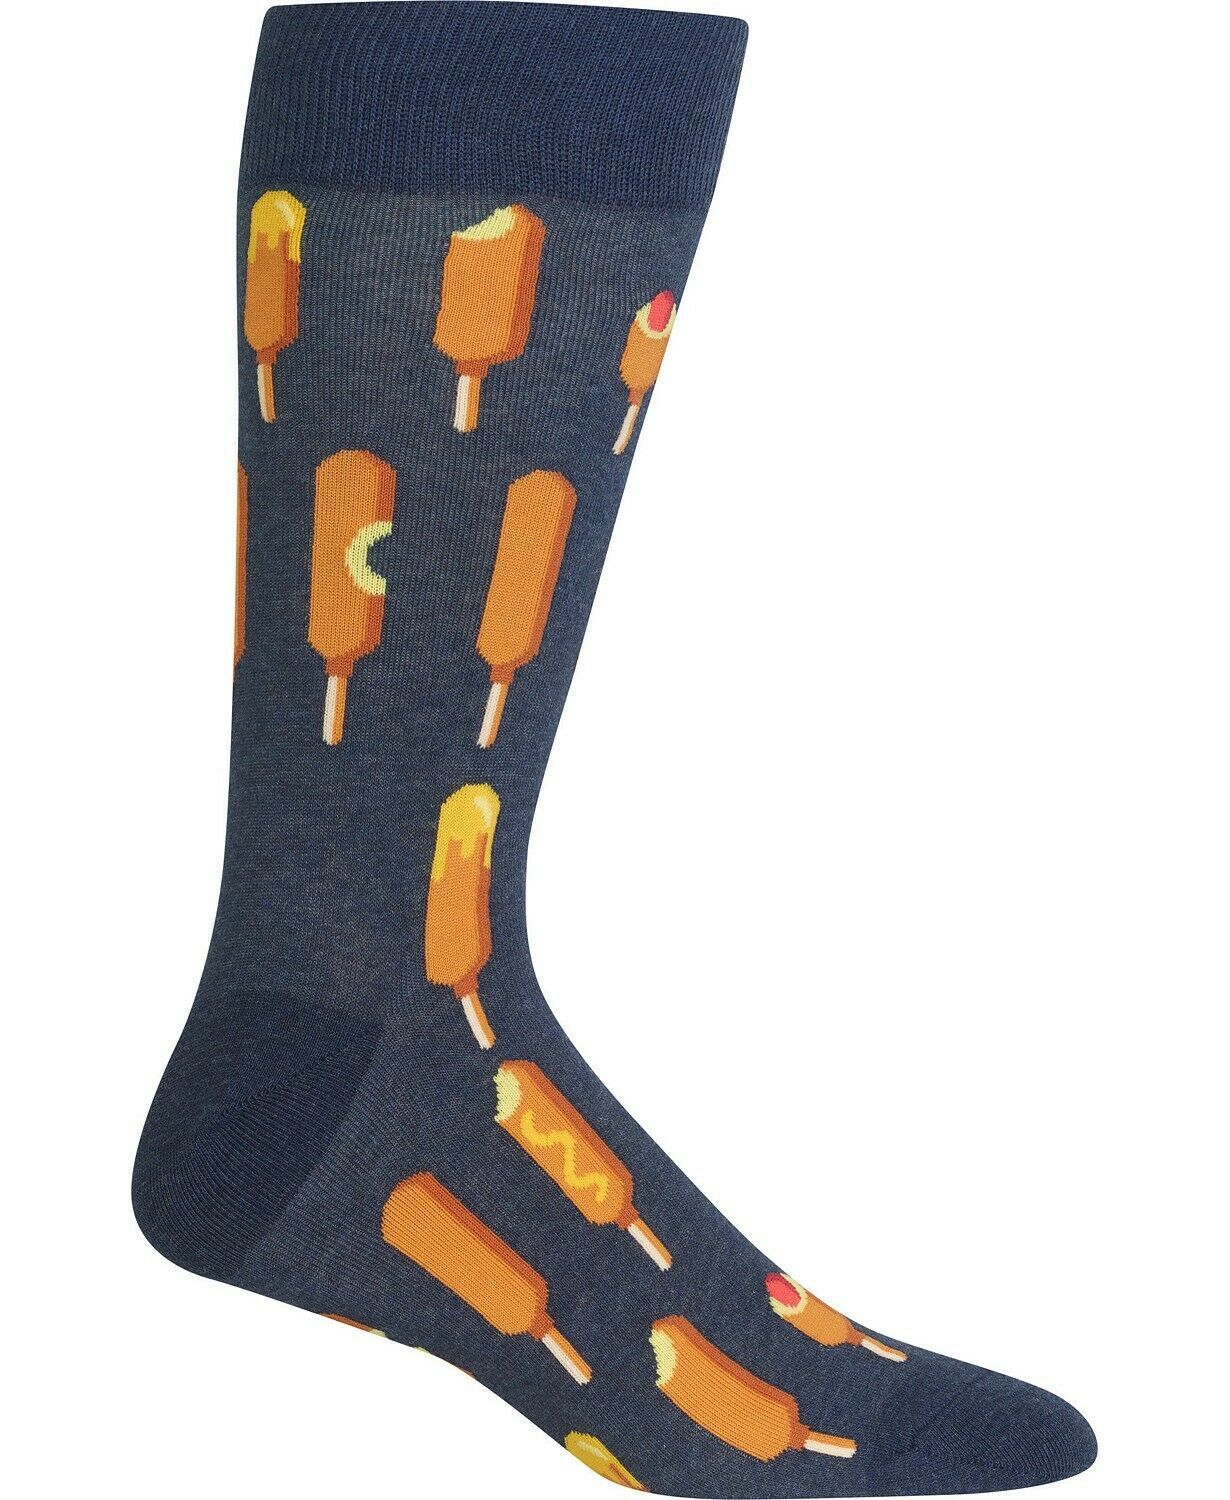 Hot Sox Mens Novelty Corndog Socks Gray Sz 10-13 $12